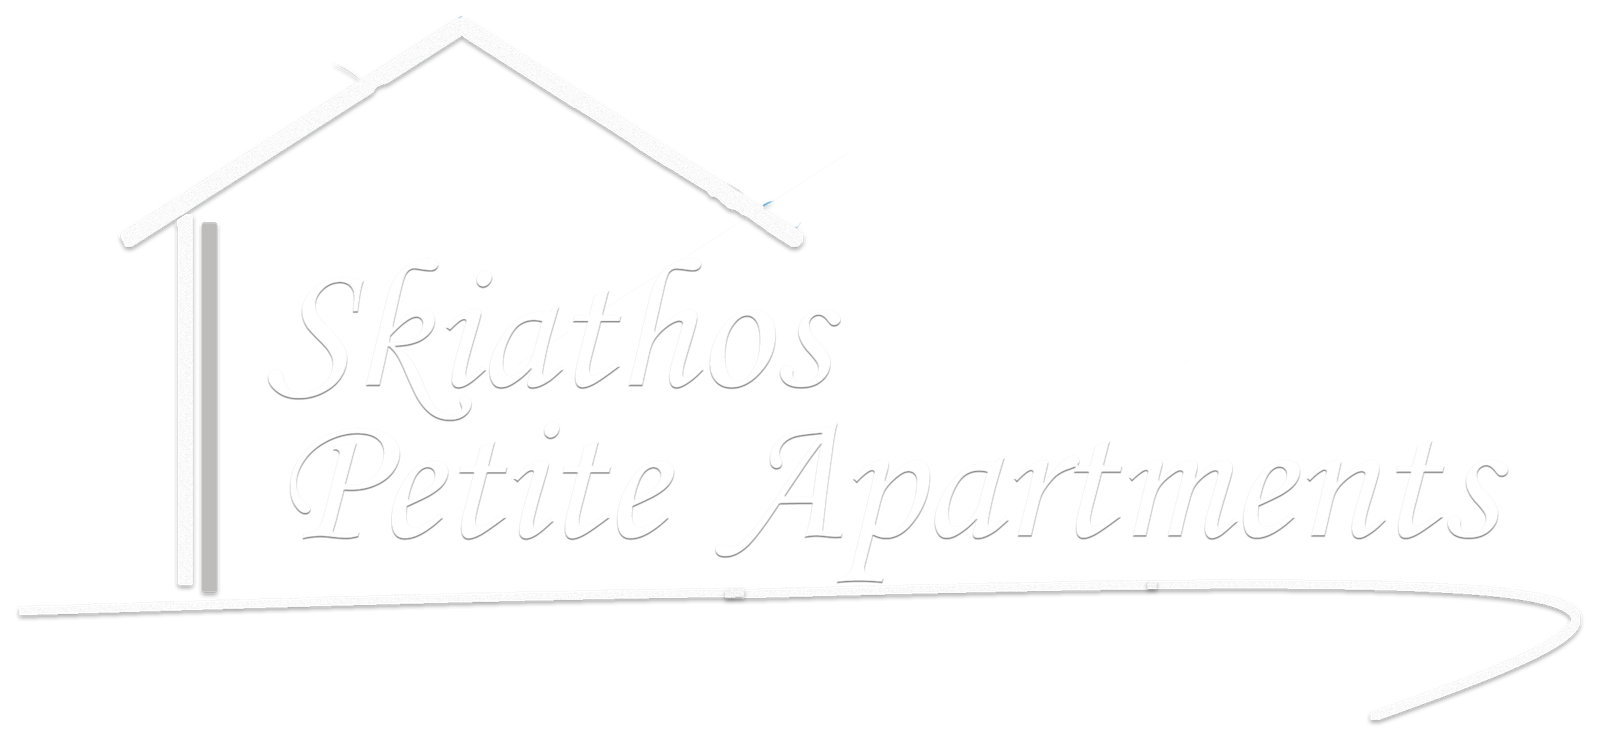 Skiathos Petite Apartments | Privacy Policy - Skiathos Petite Apartments